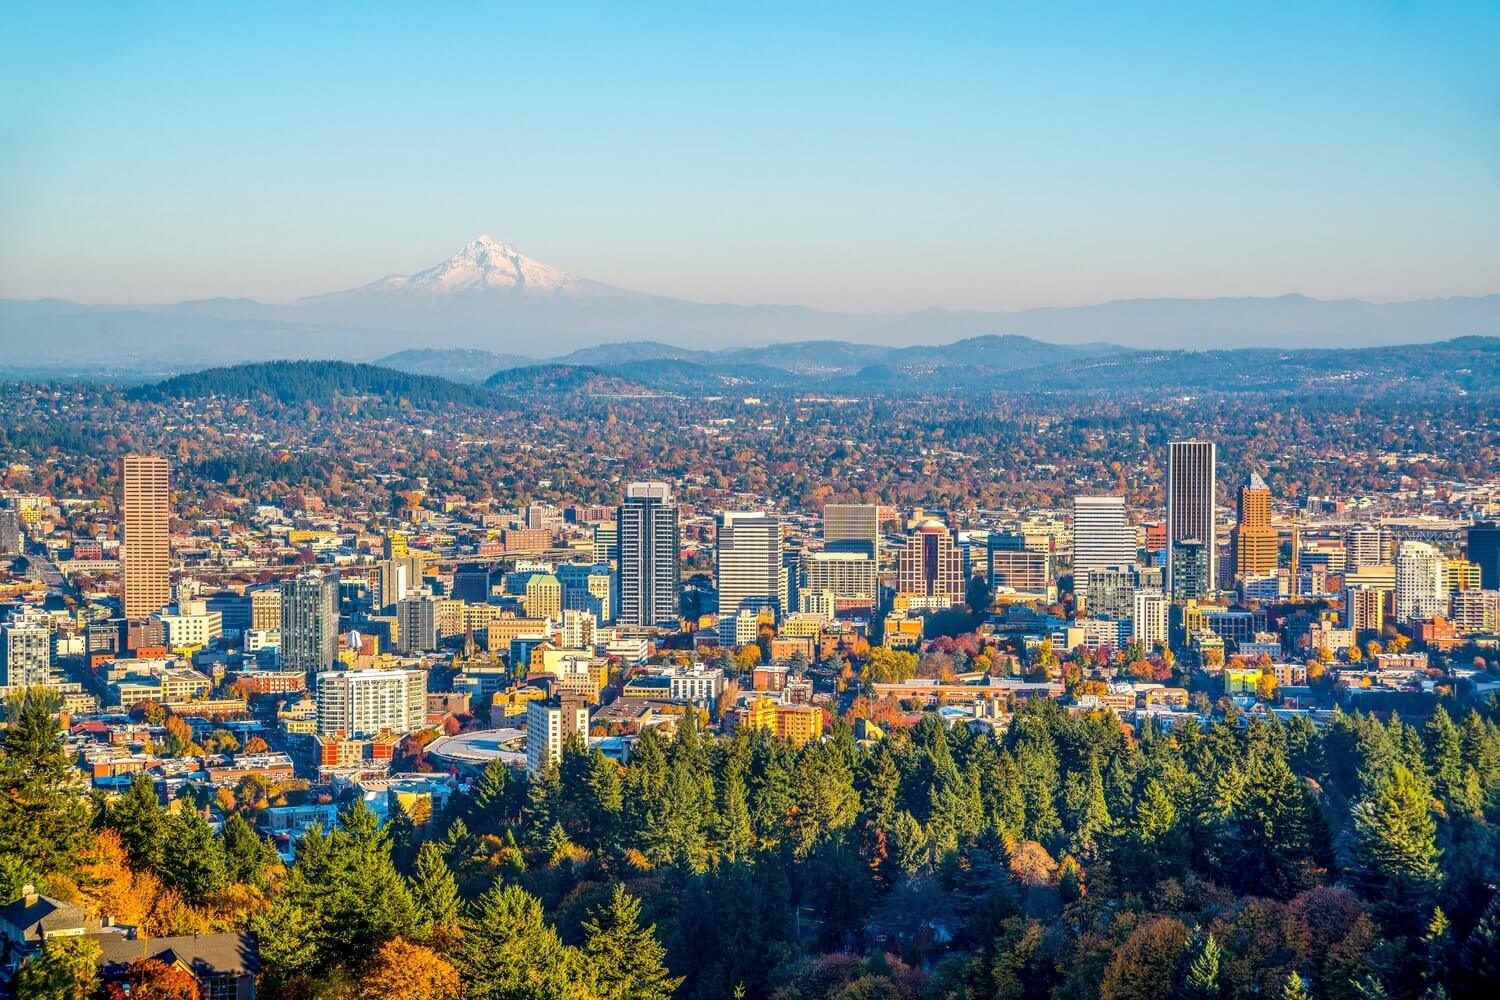 Distant view of Portland, Oregon